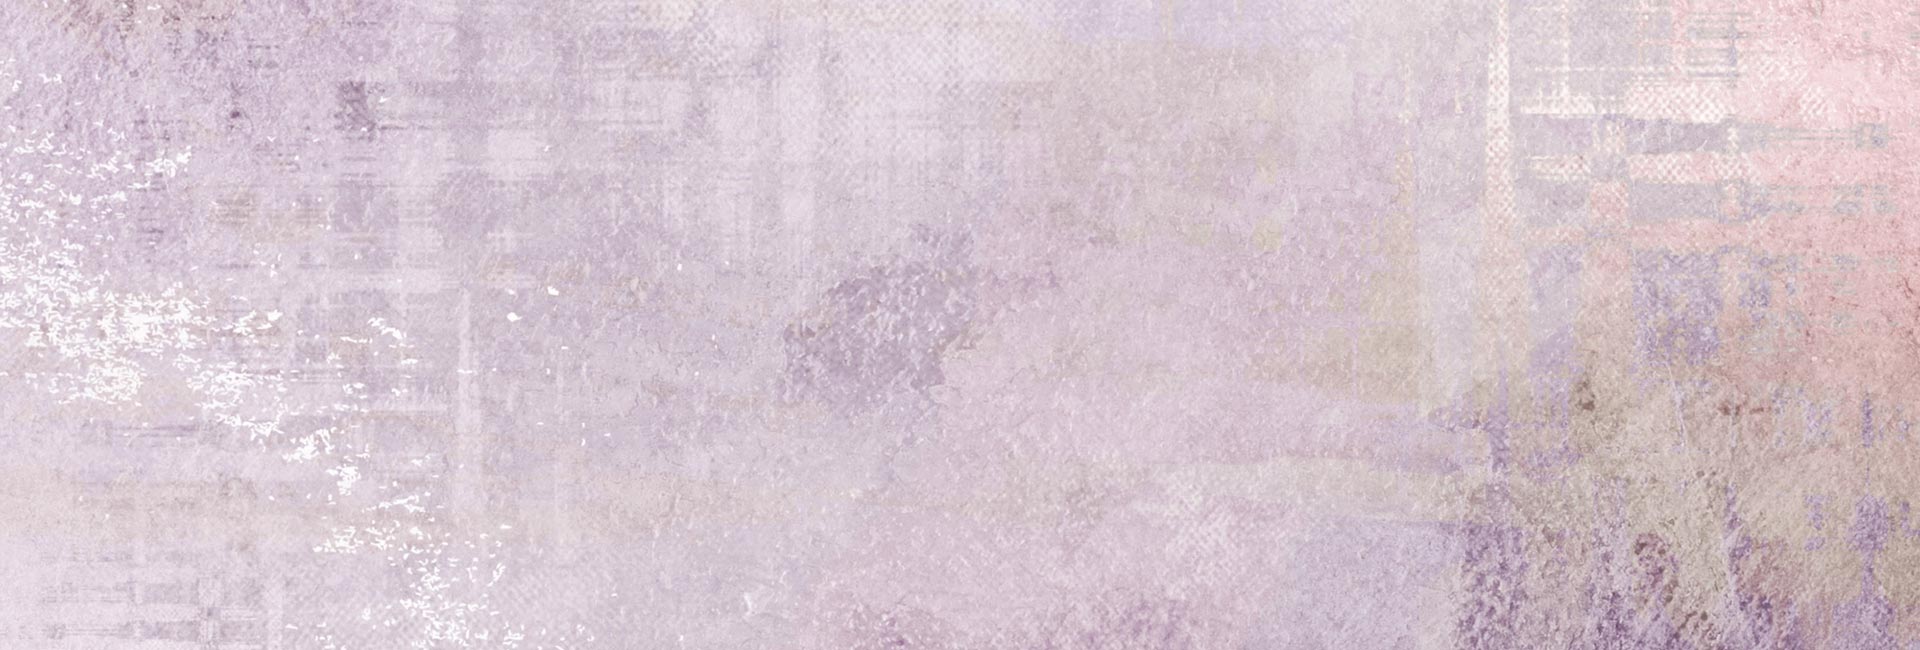 Purple background - abstract vintage design